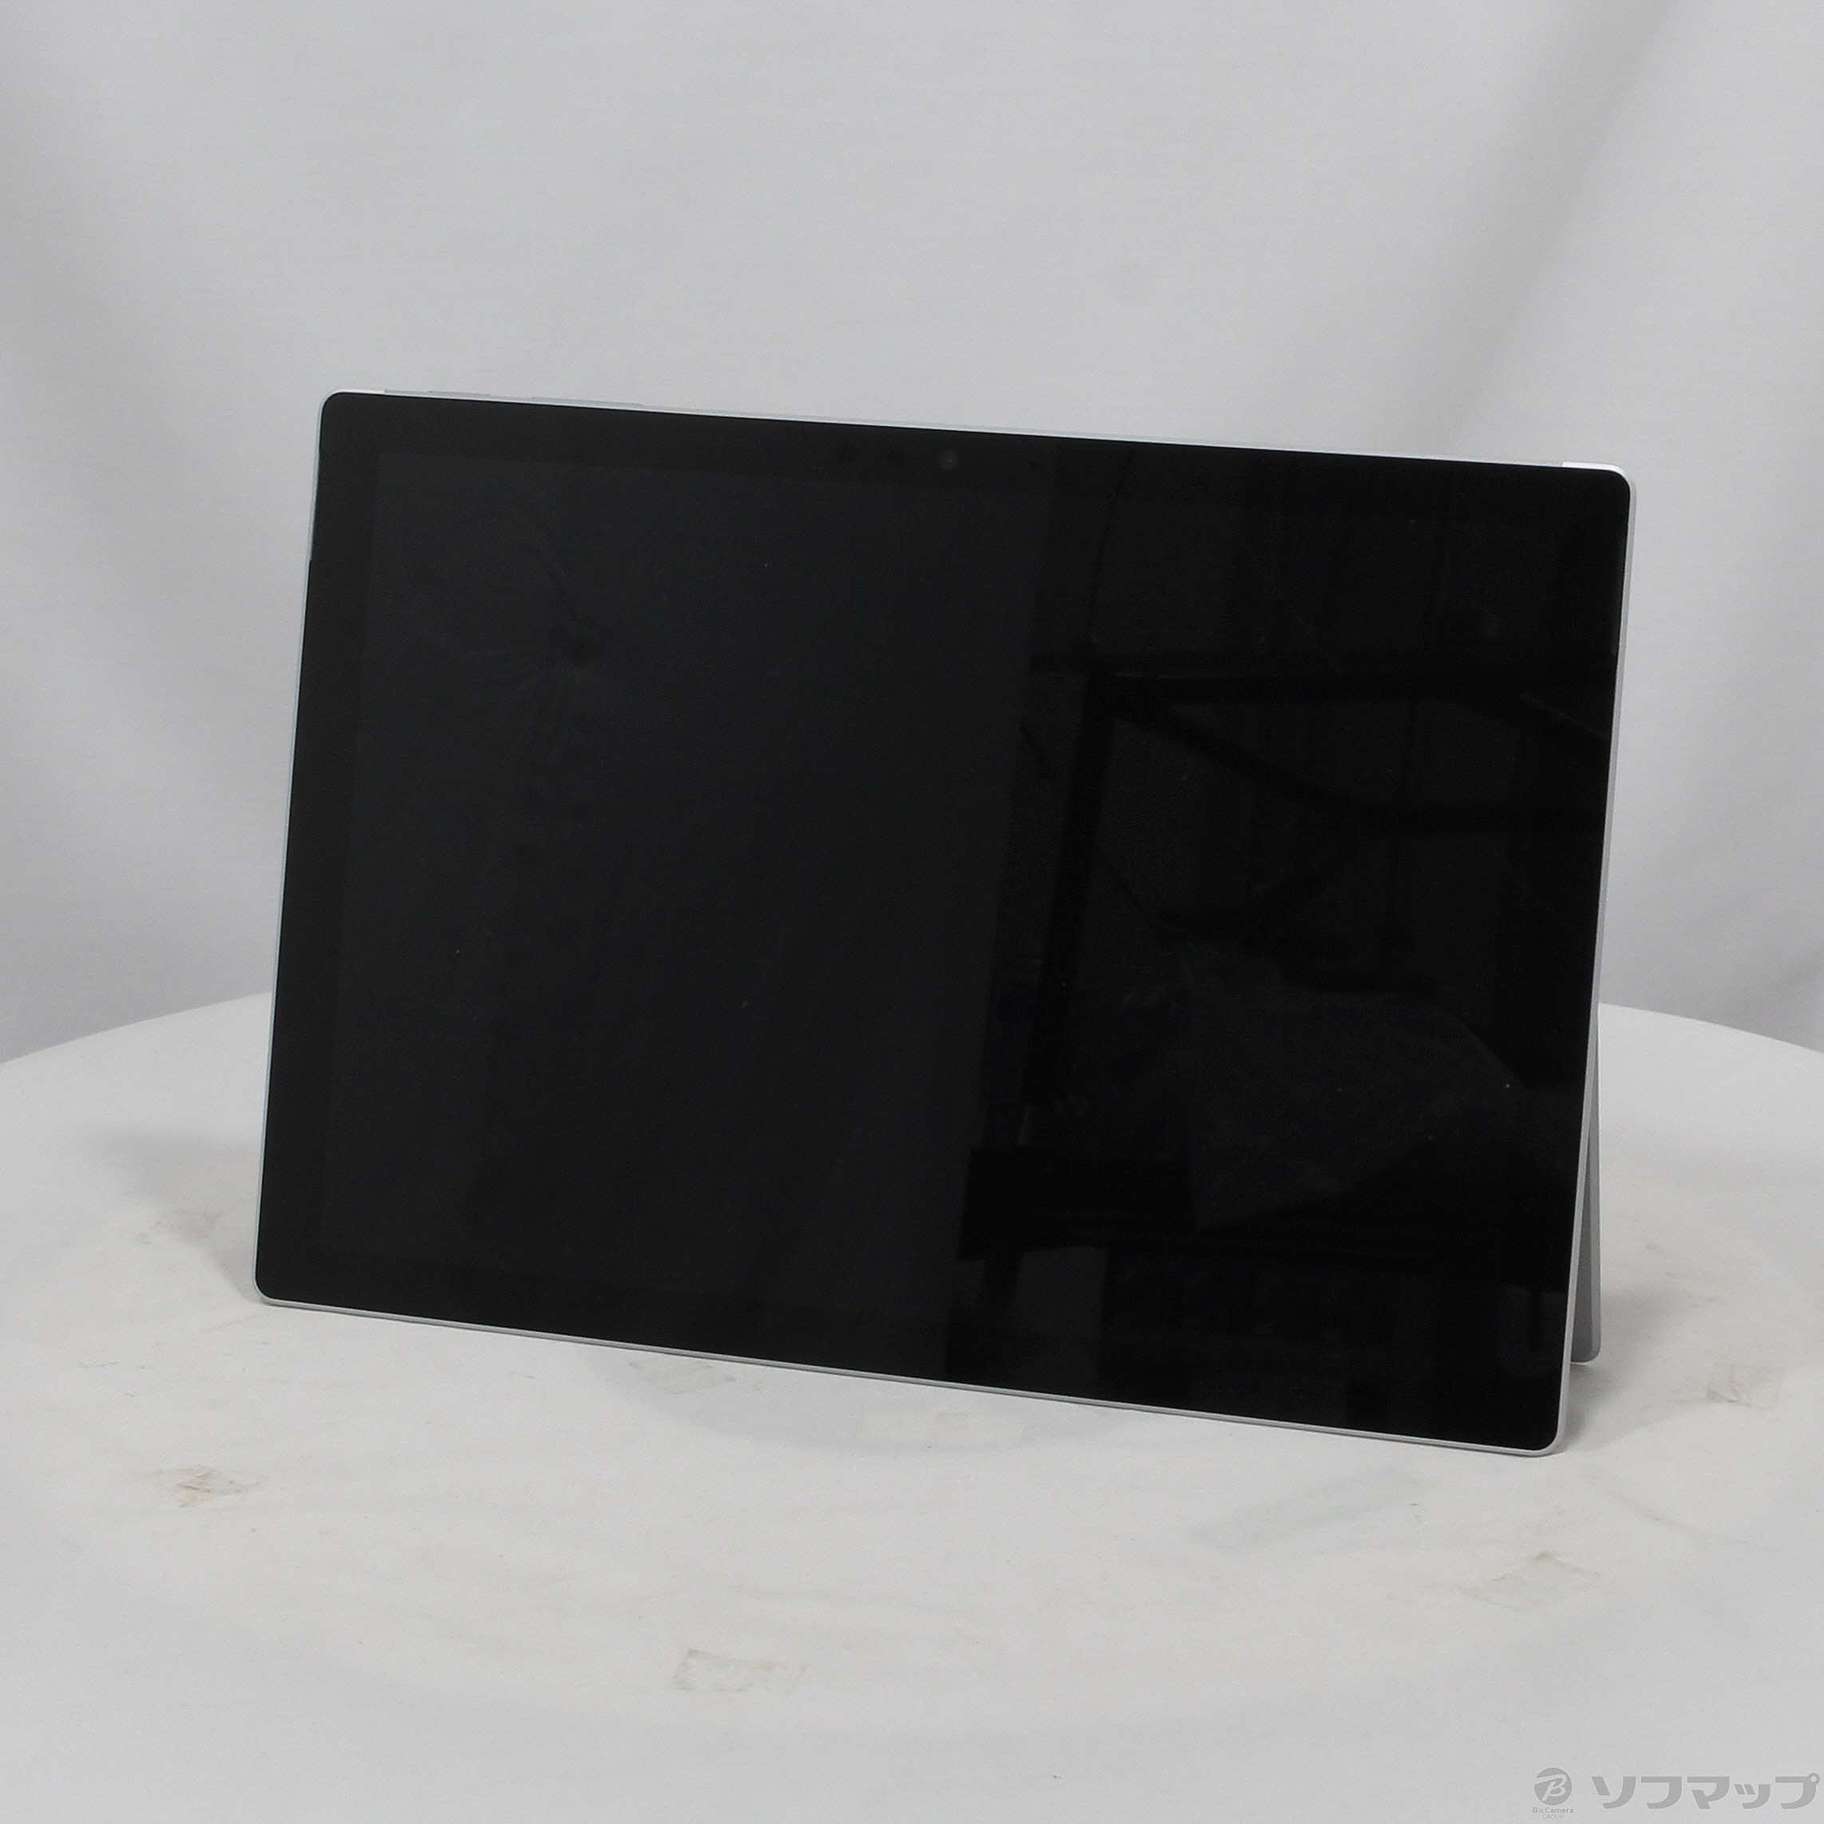 Surface Pro6 (i5/128g/8gb) LGP-00014